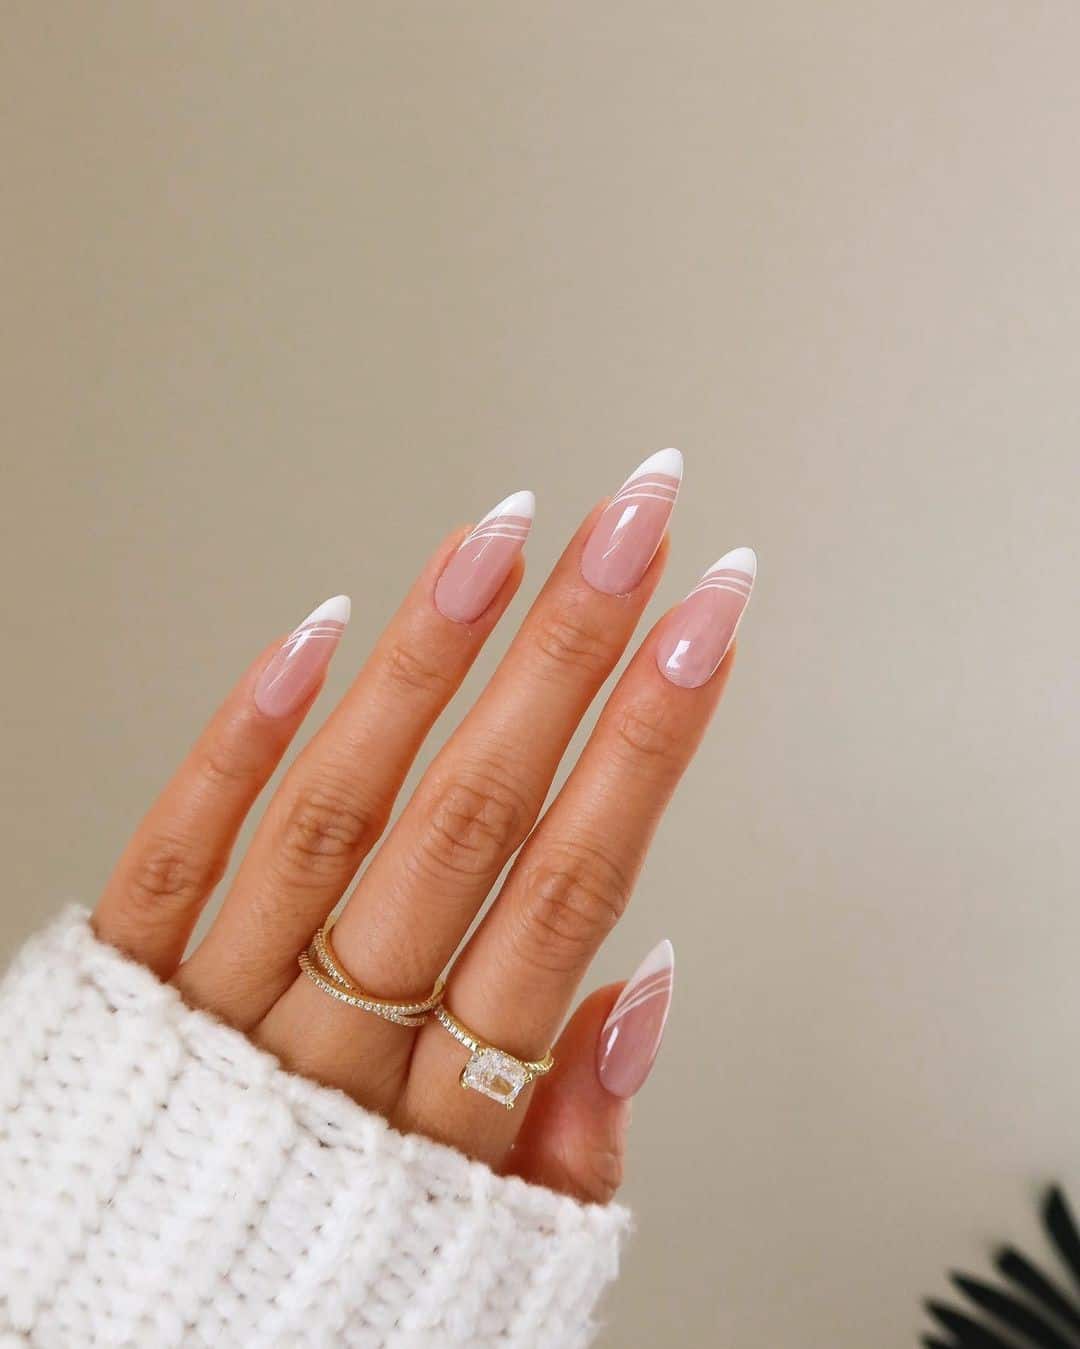 Elegant Feminine French Winter Nails